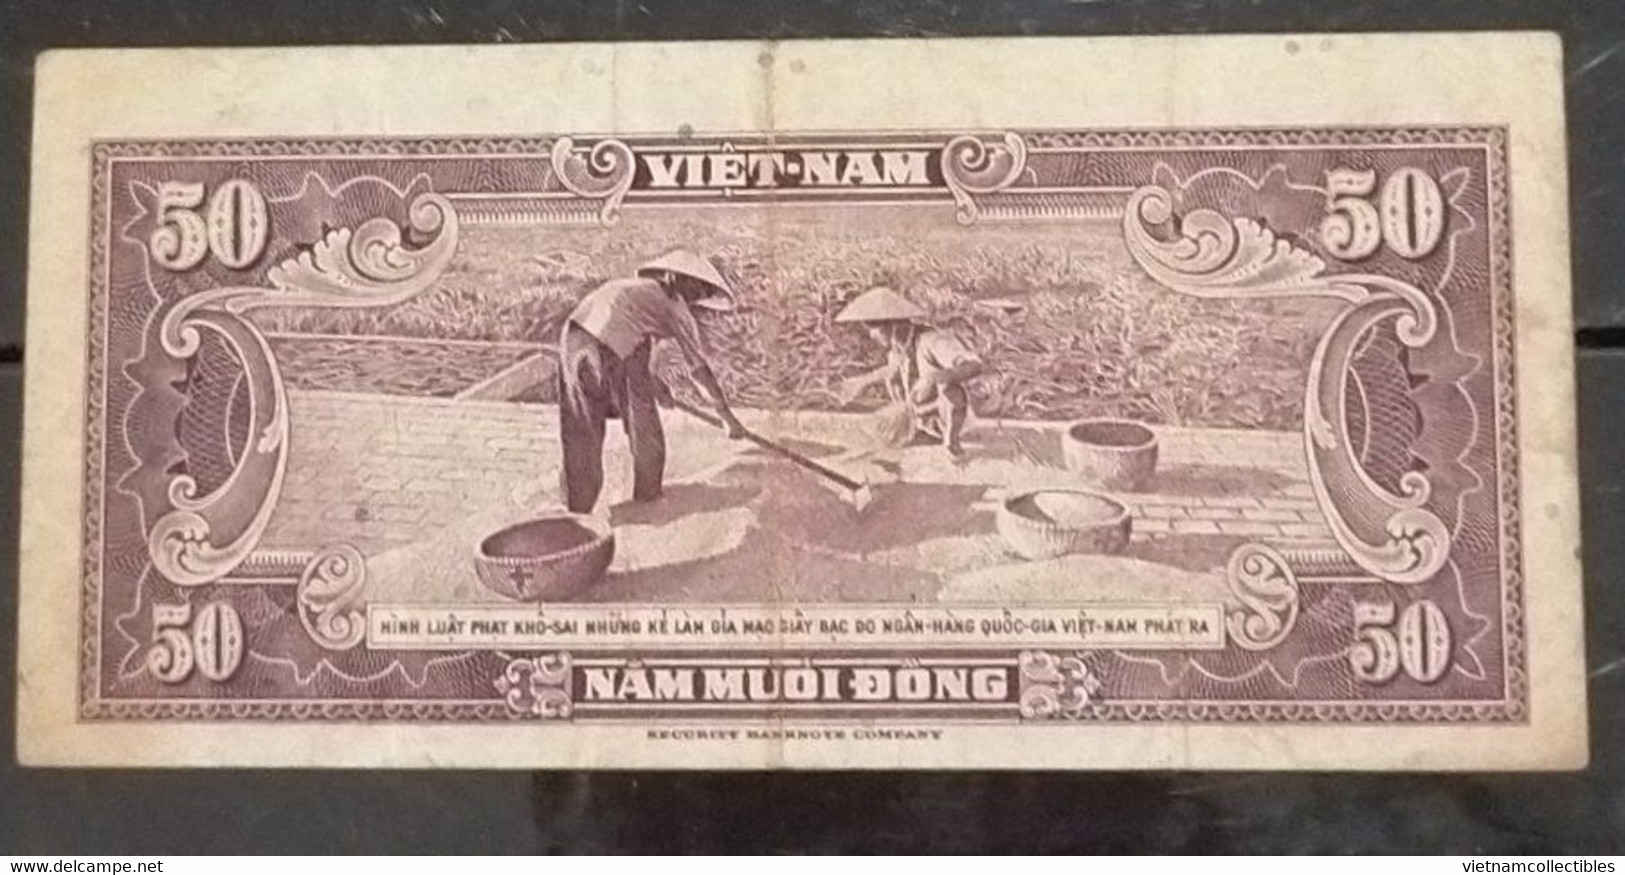 South Vietnam Viet Nam 50 Dong VF Banknote Note 1956 - Pick # 07 / 02 Photos - Viêt-Nam